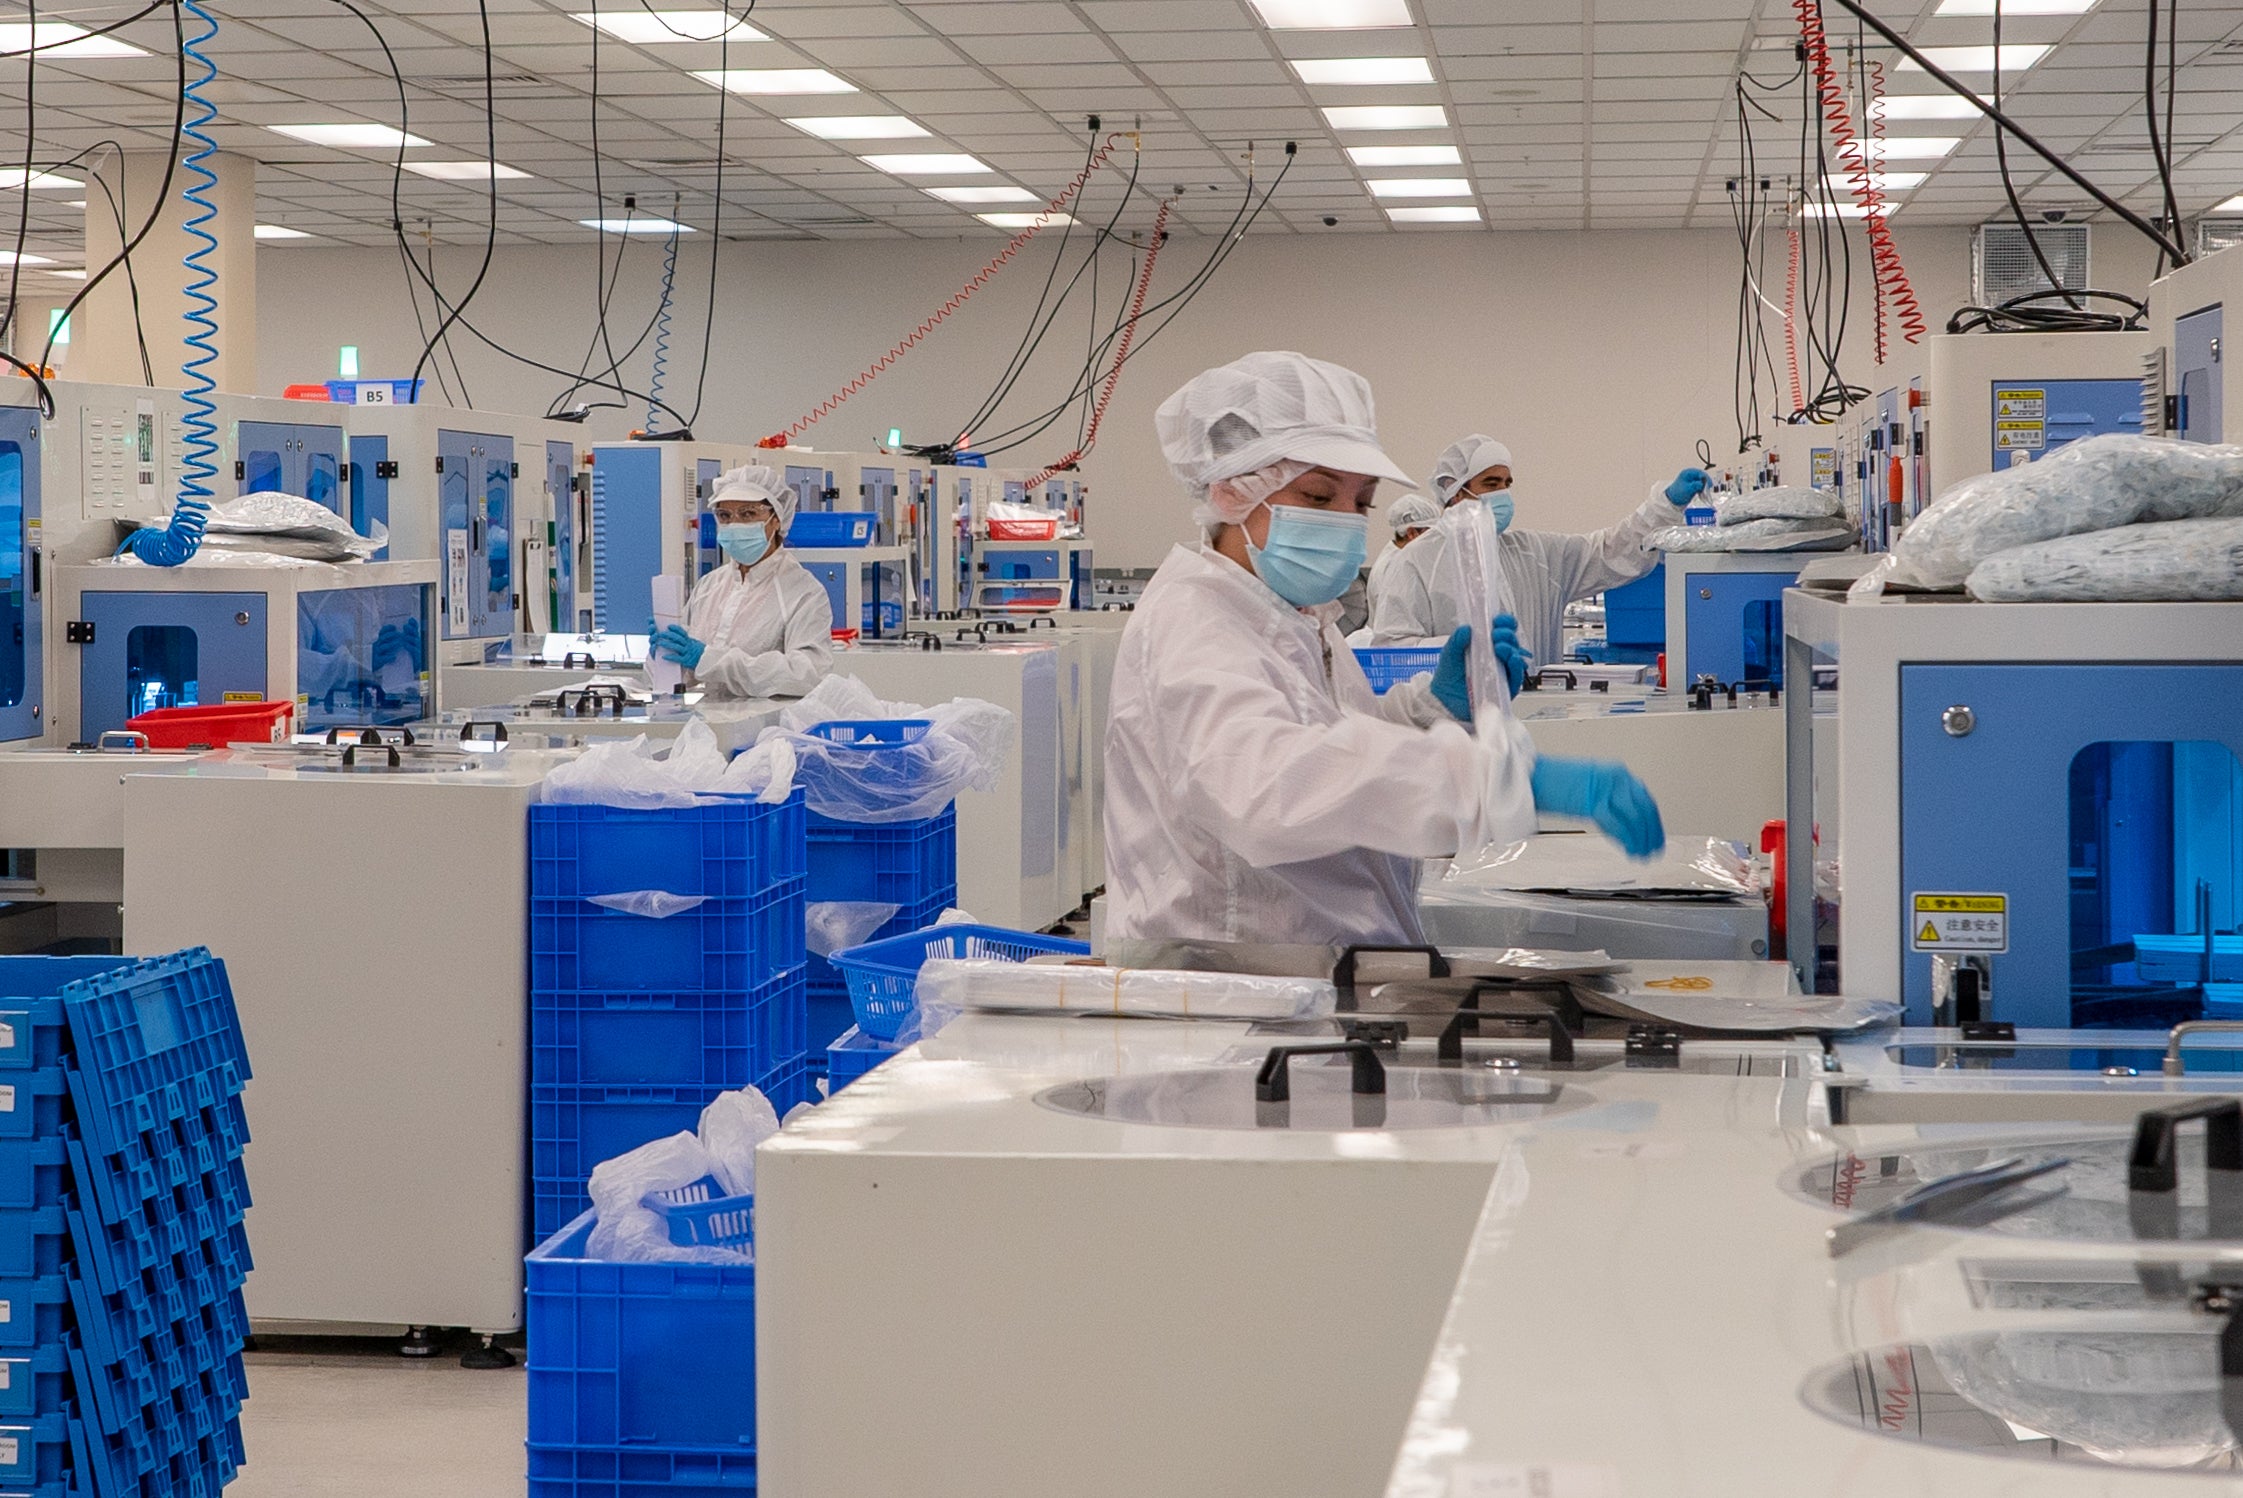 iHealth Manufactures Over 70 Million iHealth COVID-19 Test Kits in Irwindale, CA